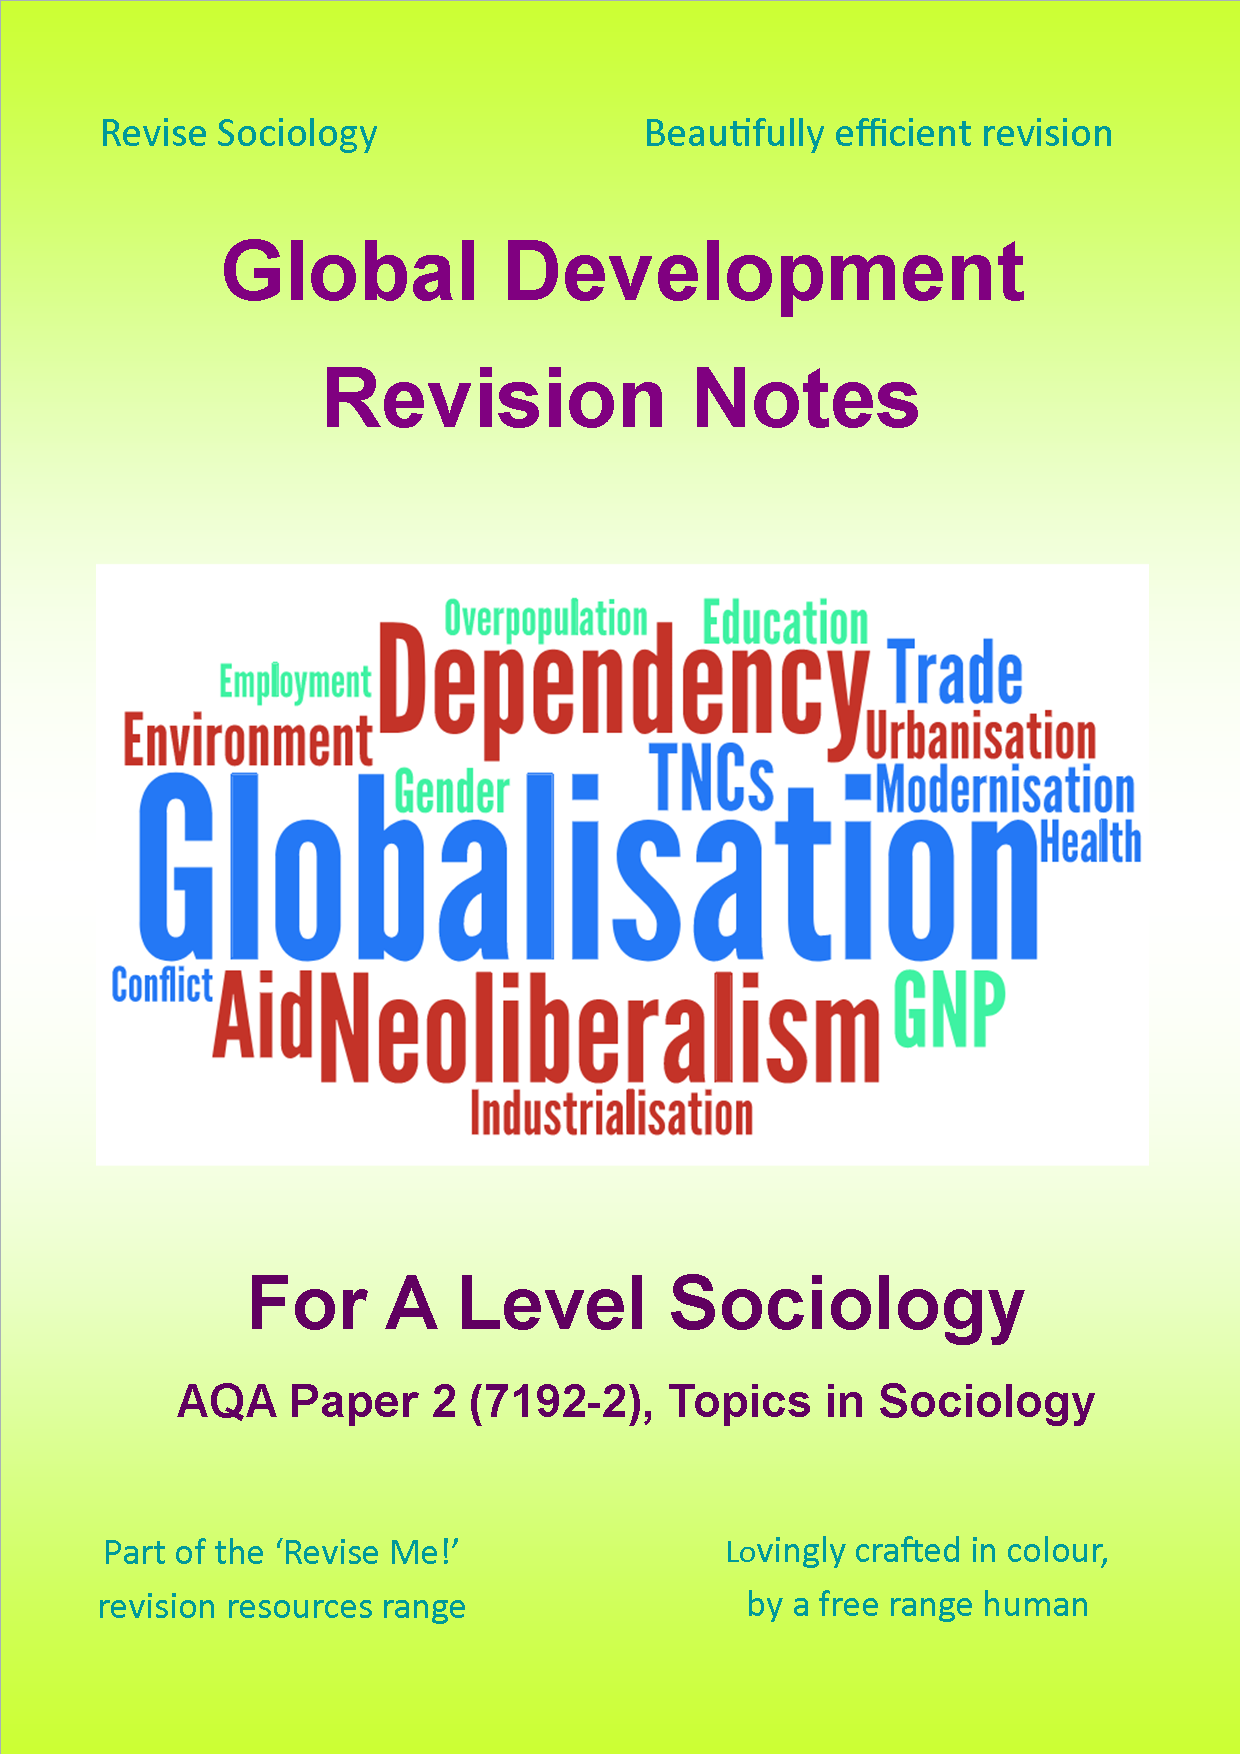 globalization research paper topics